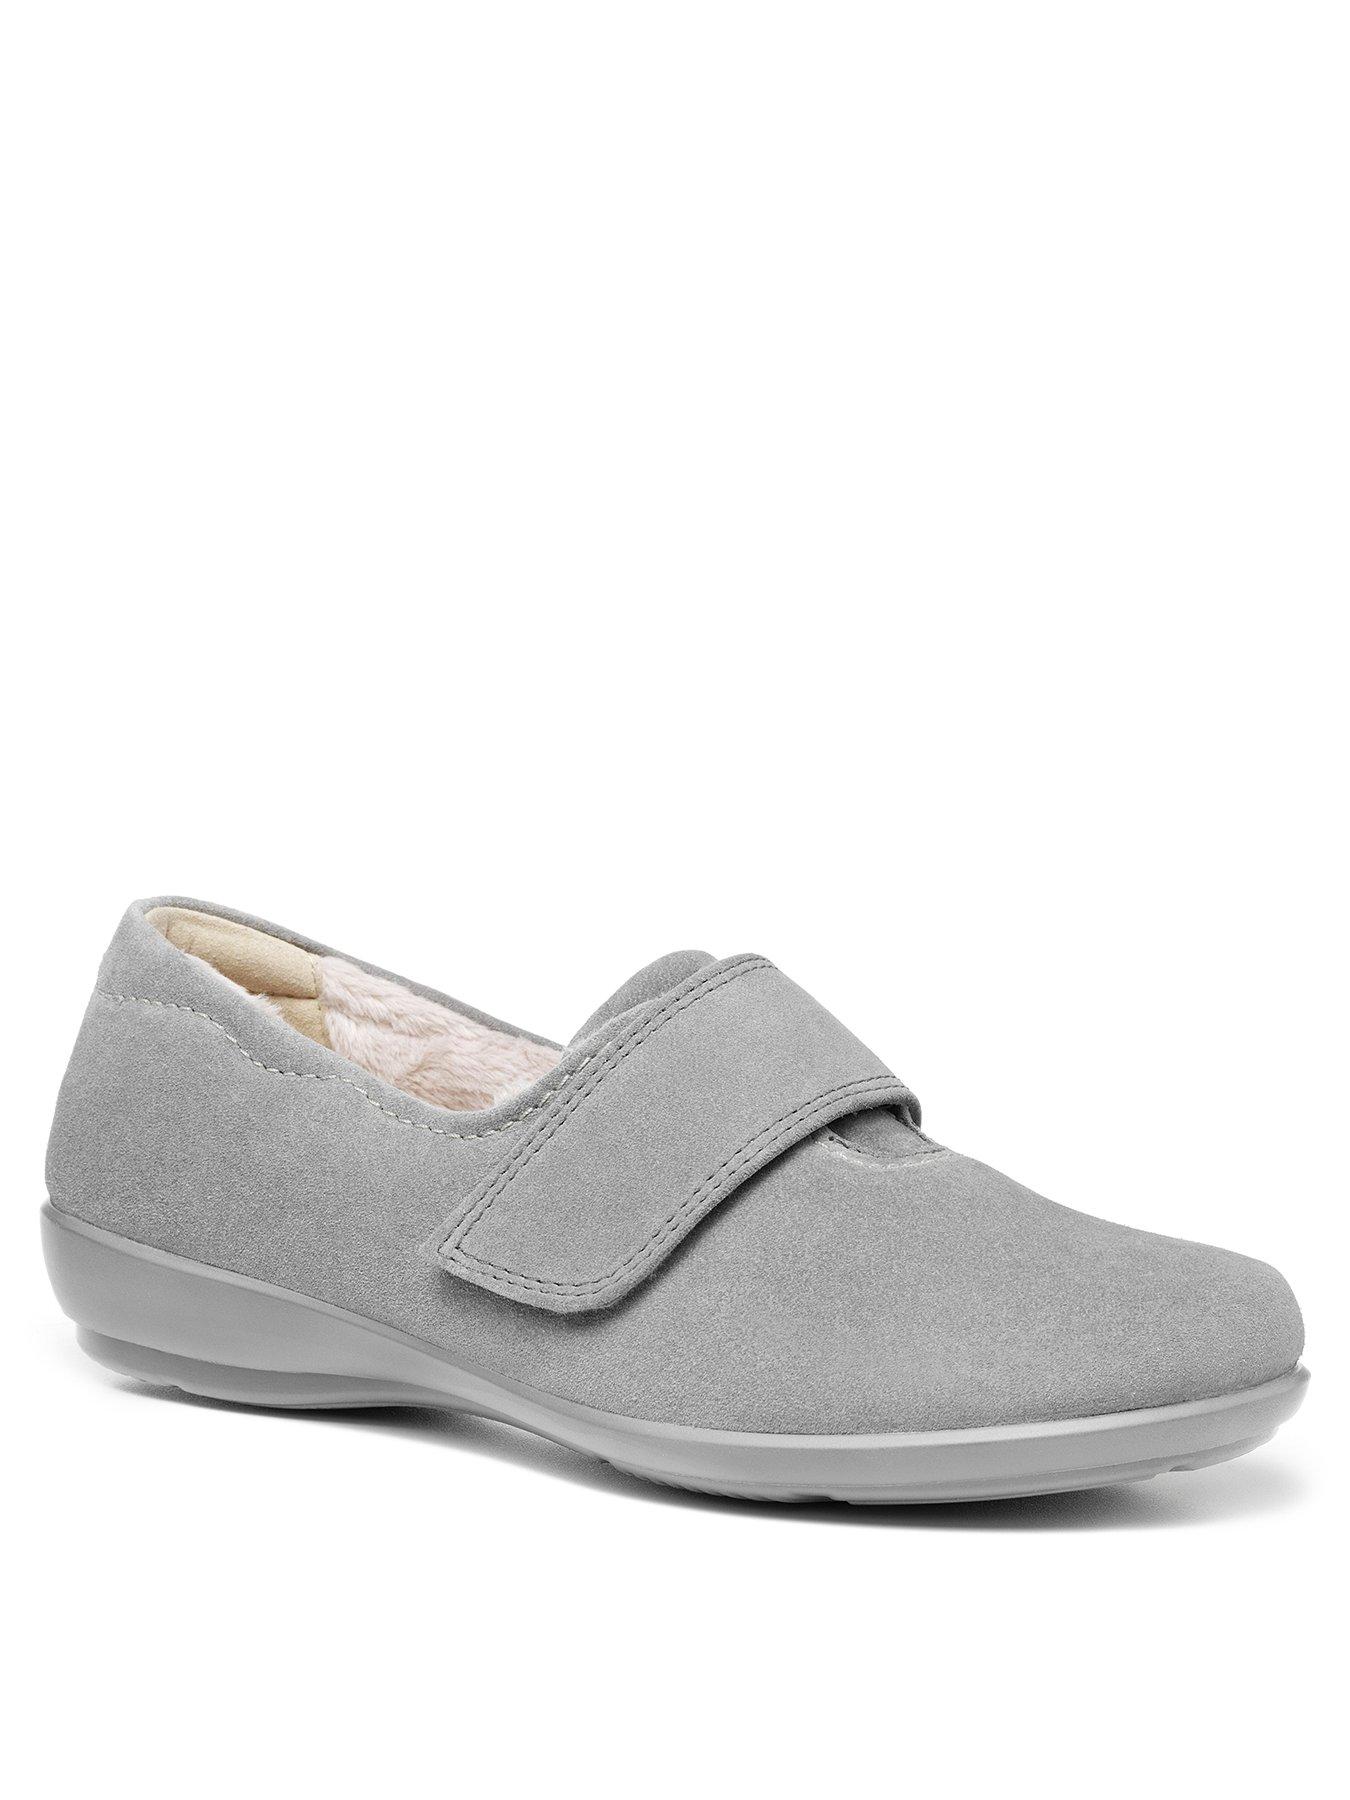 grey shoe boots uk